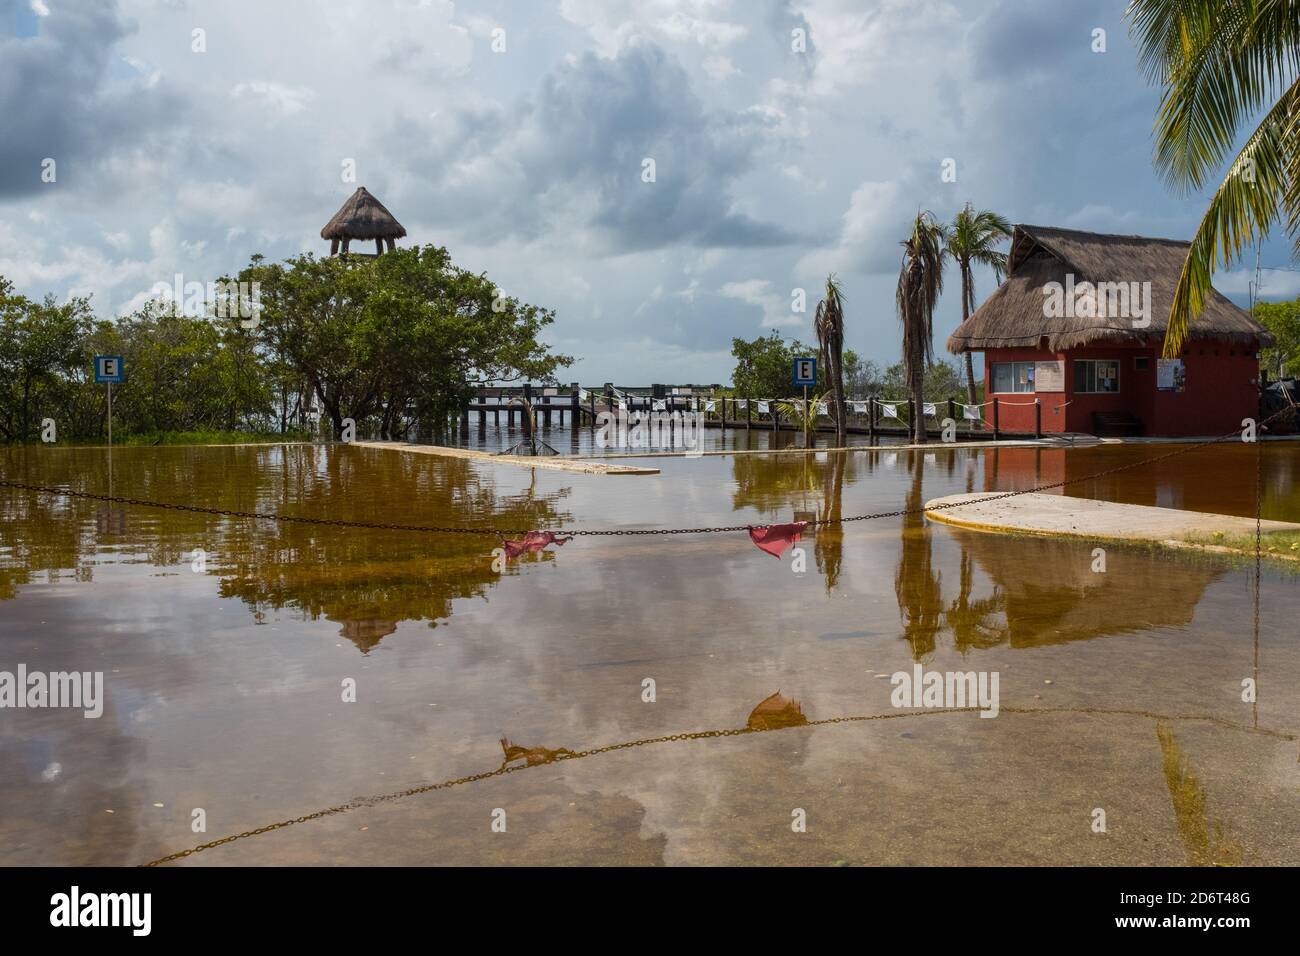 Yucatan Mexico coast, flooding after the passage of Hurricane Delta Stock Photo